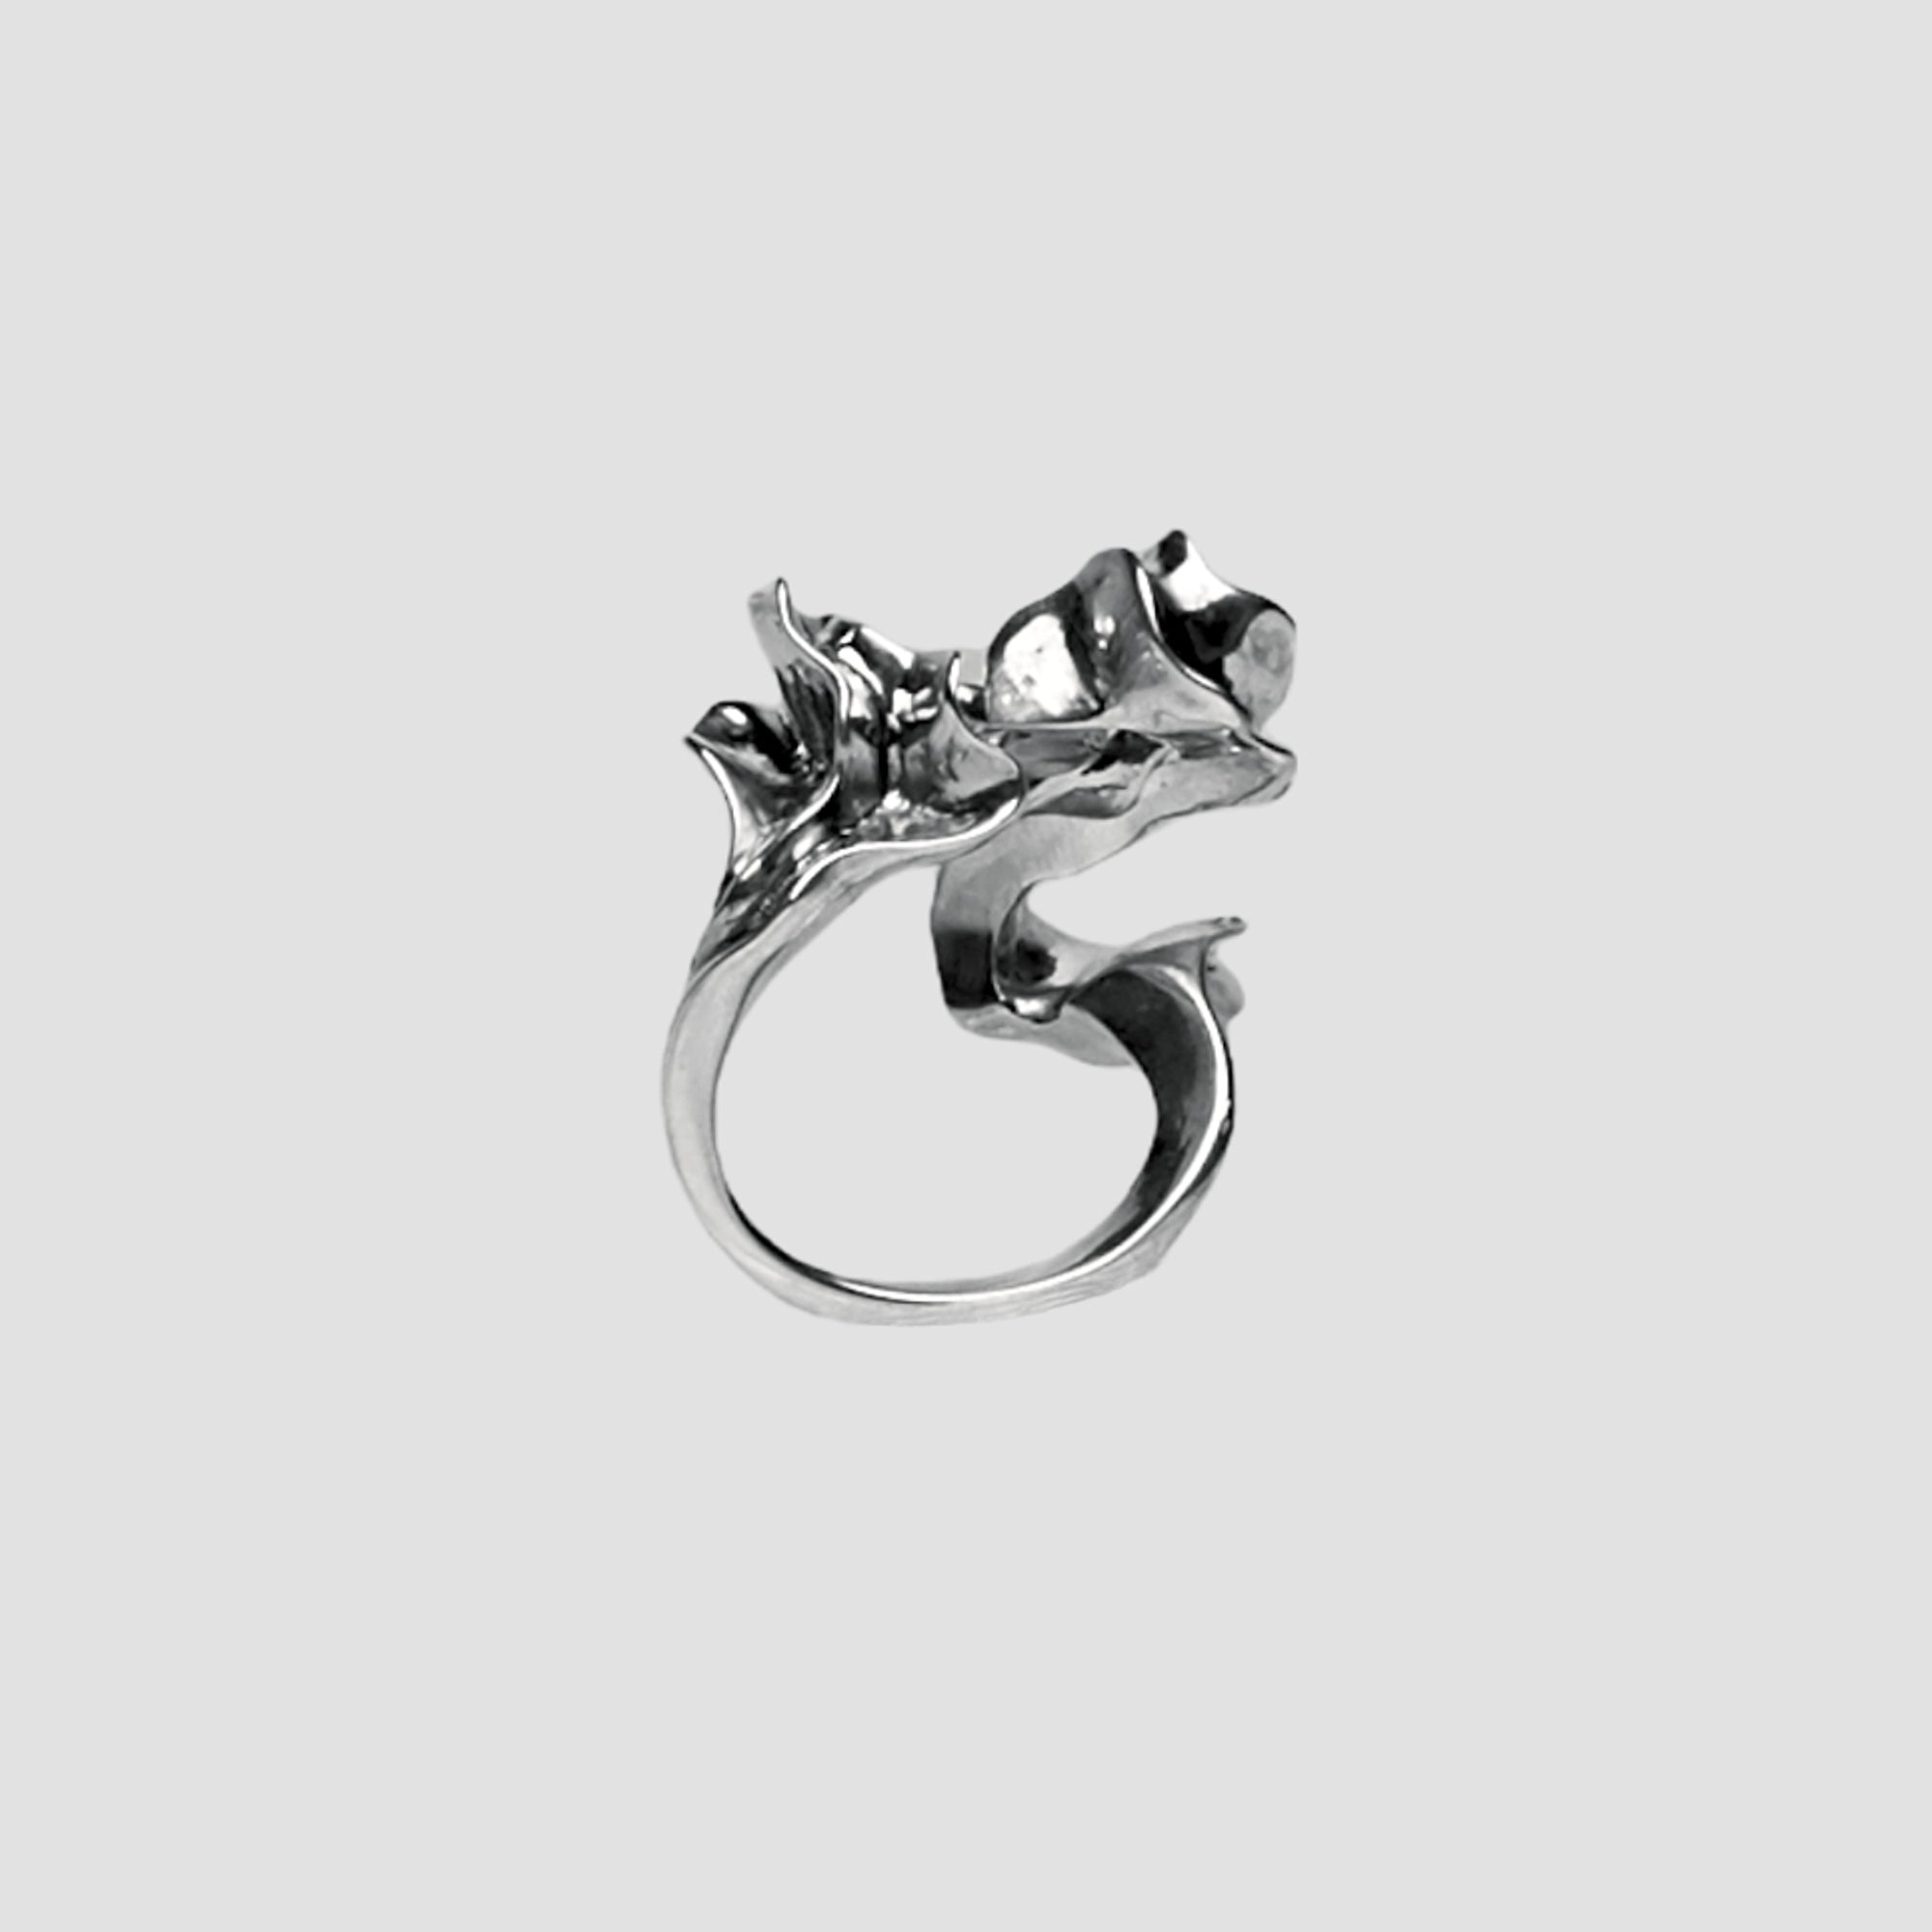 Thalassa Ring - Handmade in 925 Silver